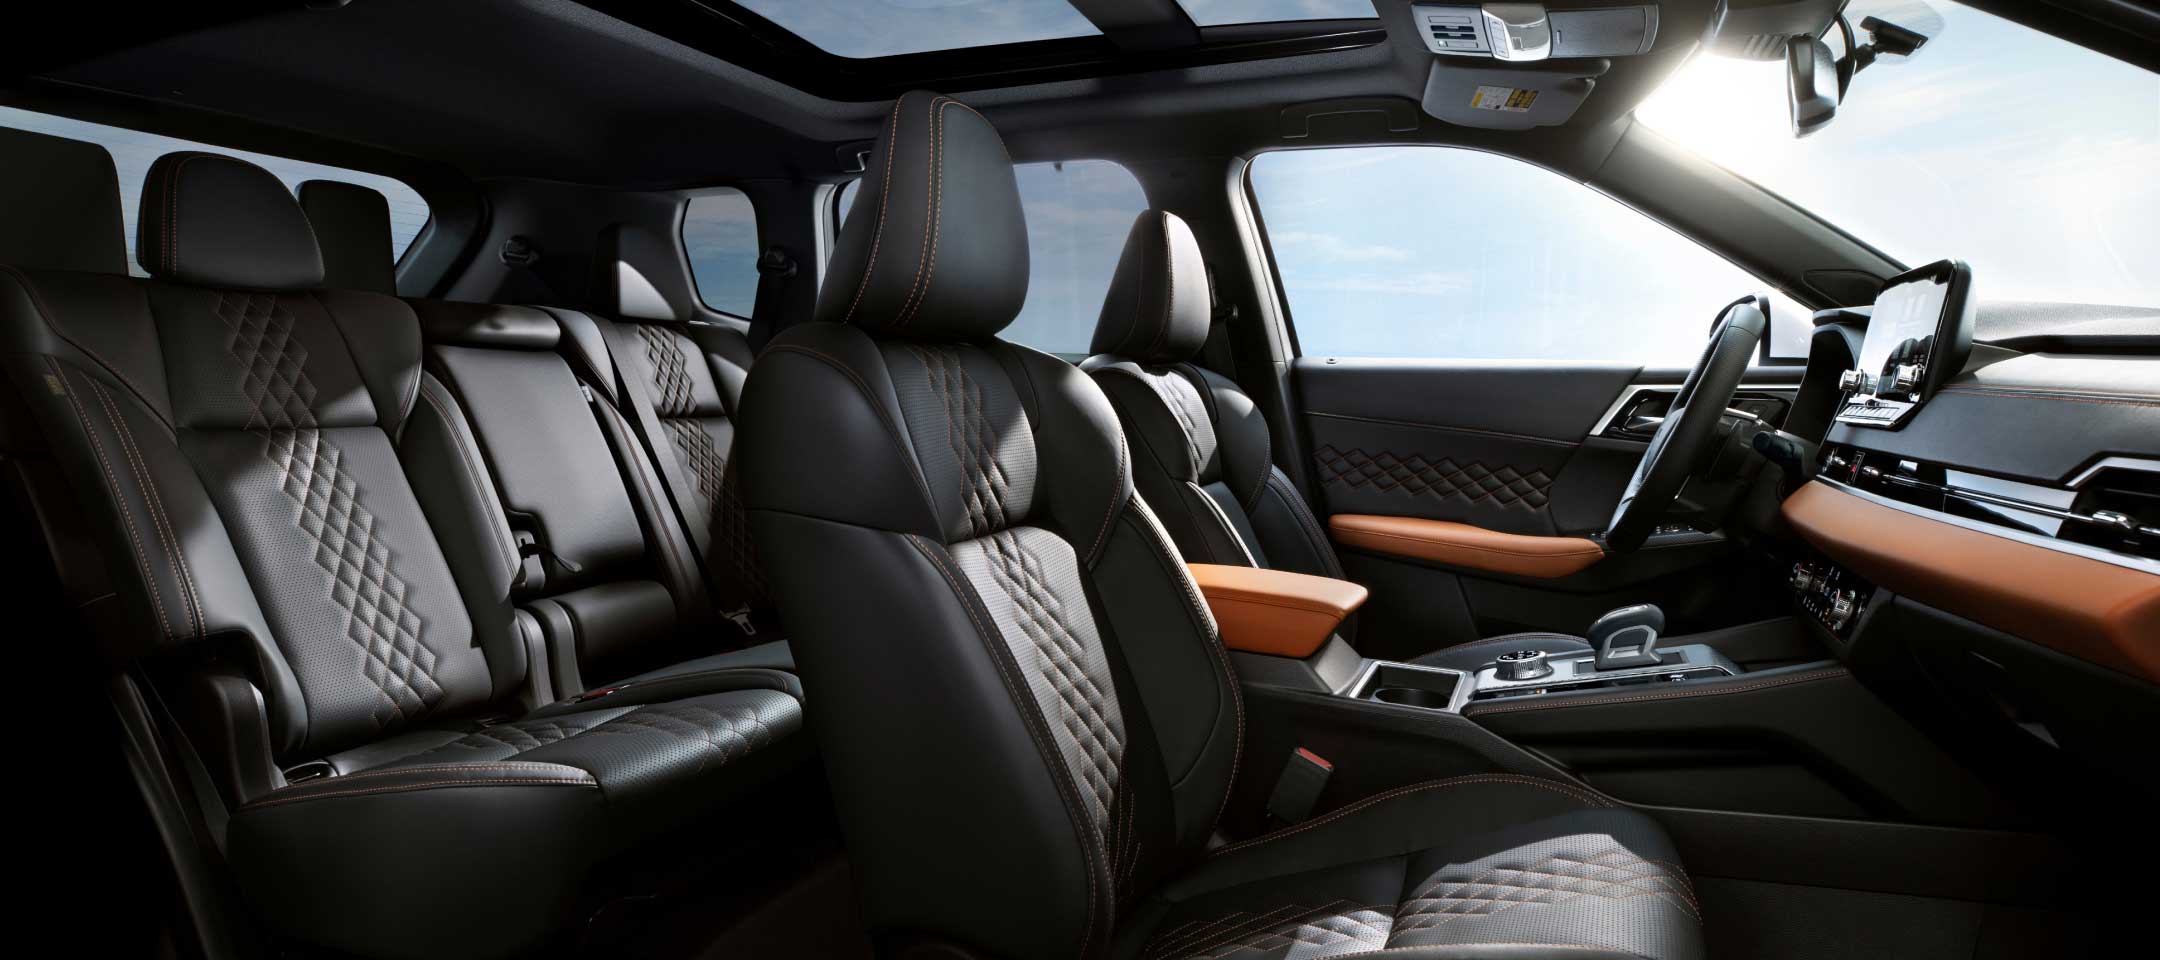 Interior view of the 2023 Mitsubishi Outlander PHEV SUV seating